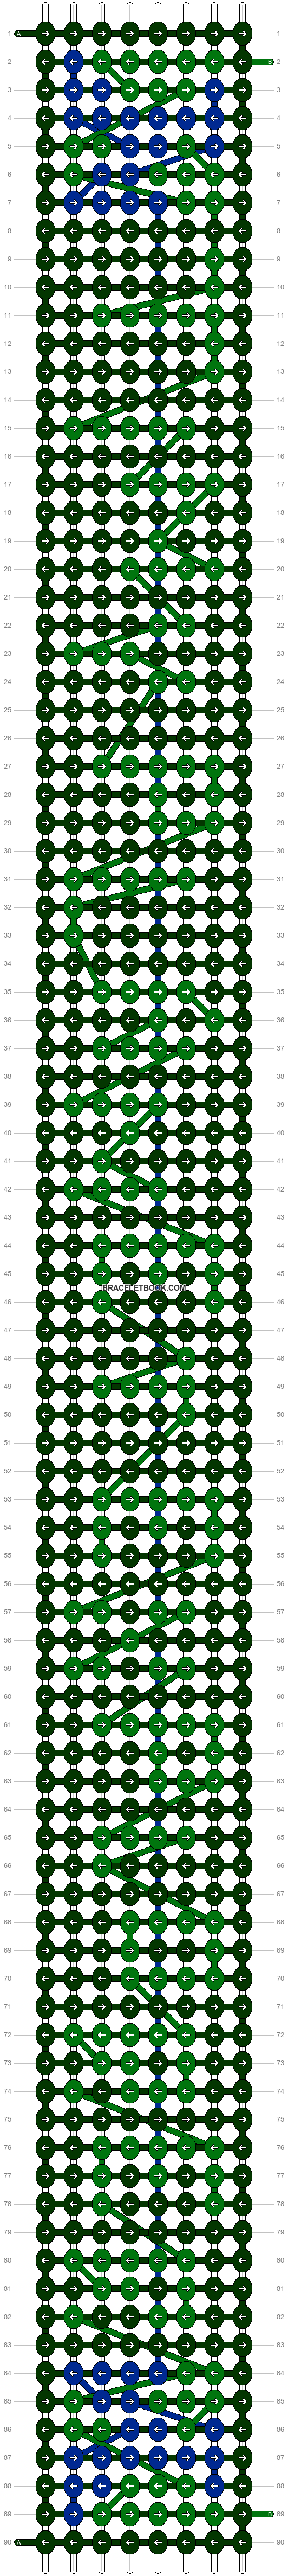 Alpha pattern #15523 pattern